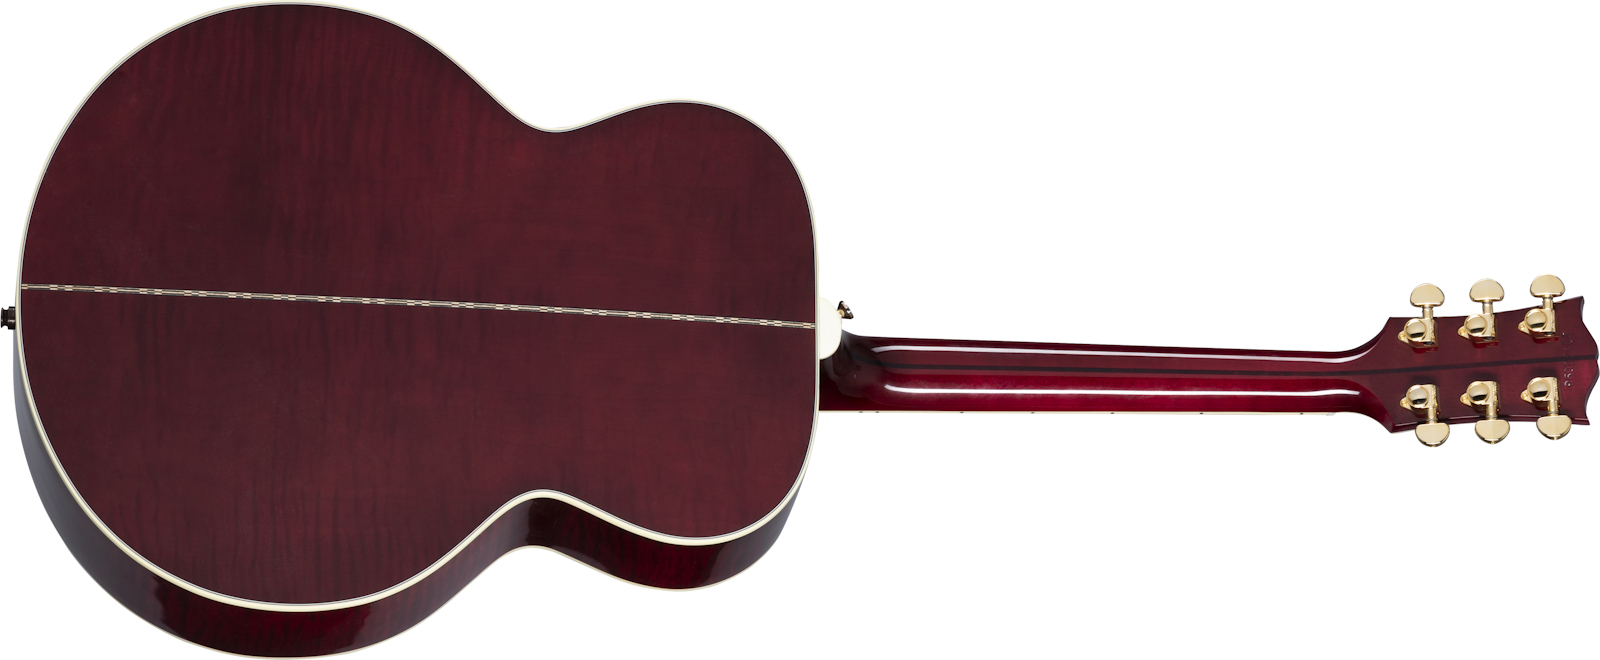 Gibson Sj-200 Standard Modern 2021 Super Jumbo Epicea Erable Rw - Wine Red - Elektro-akoestische gitaar - Variation 1